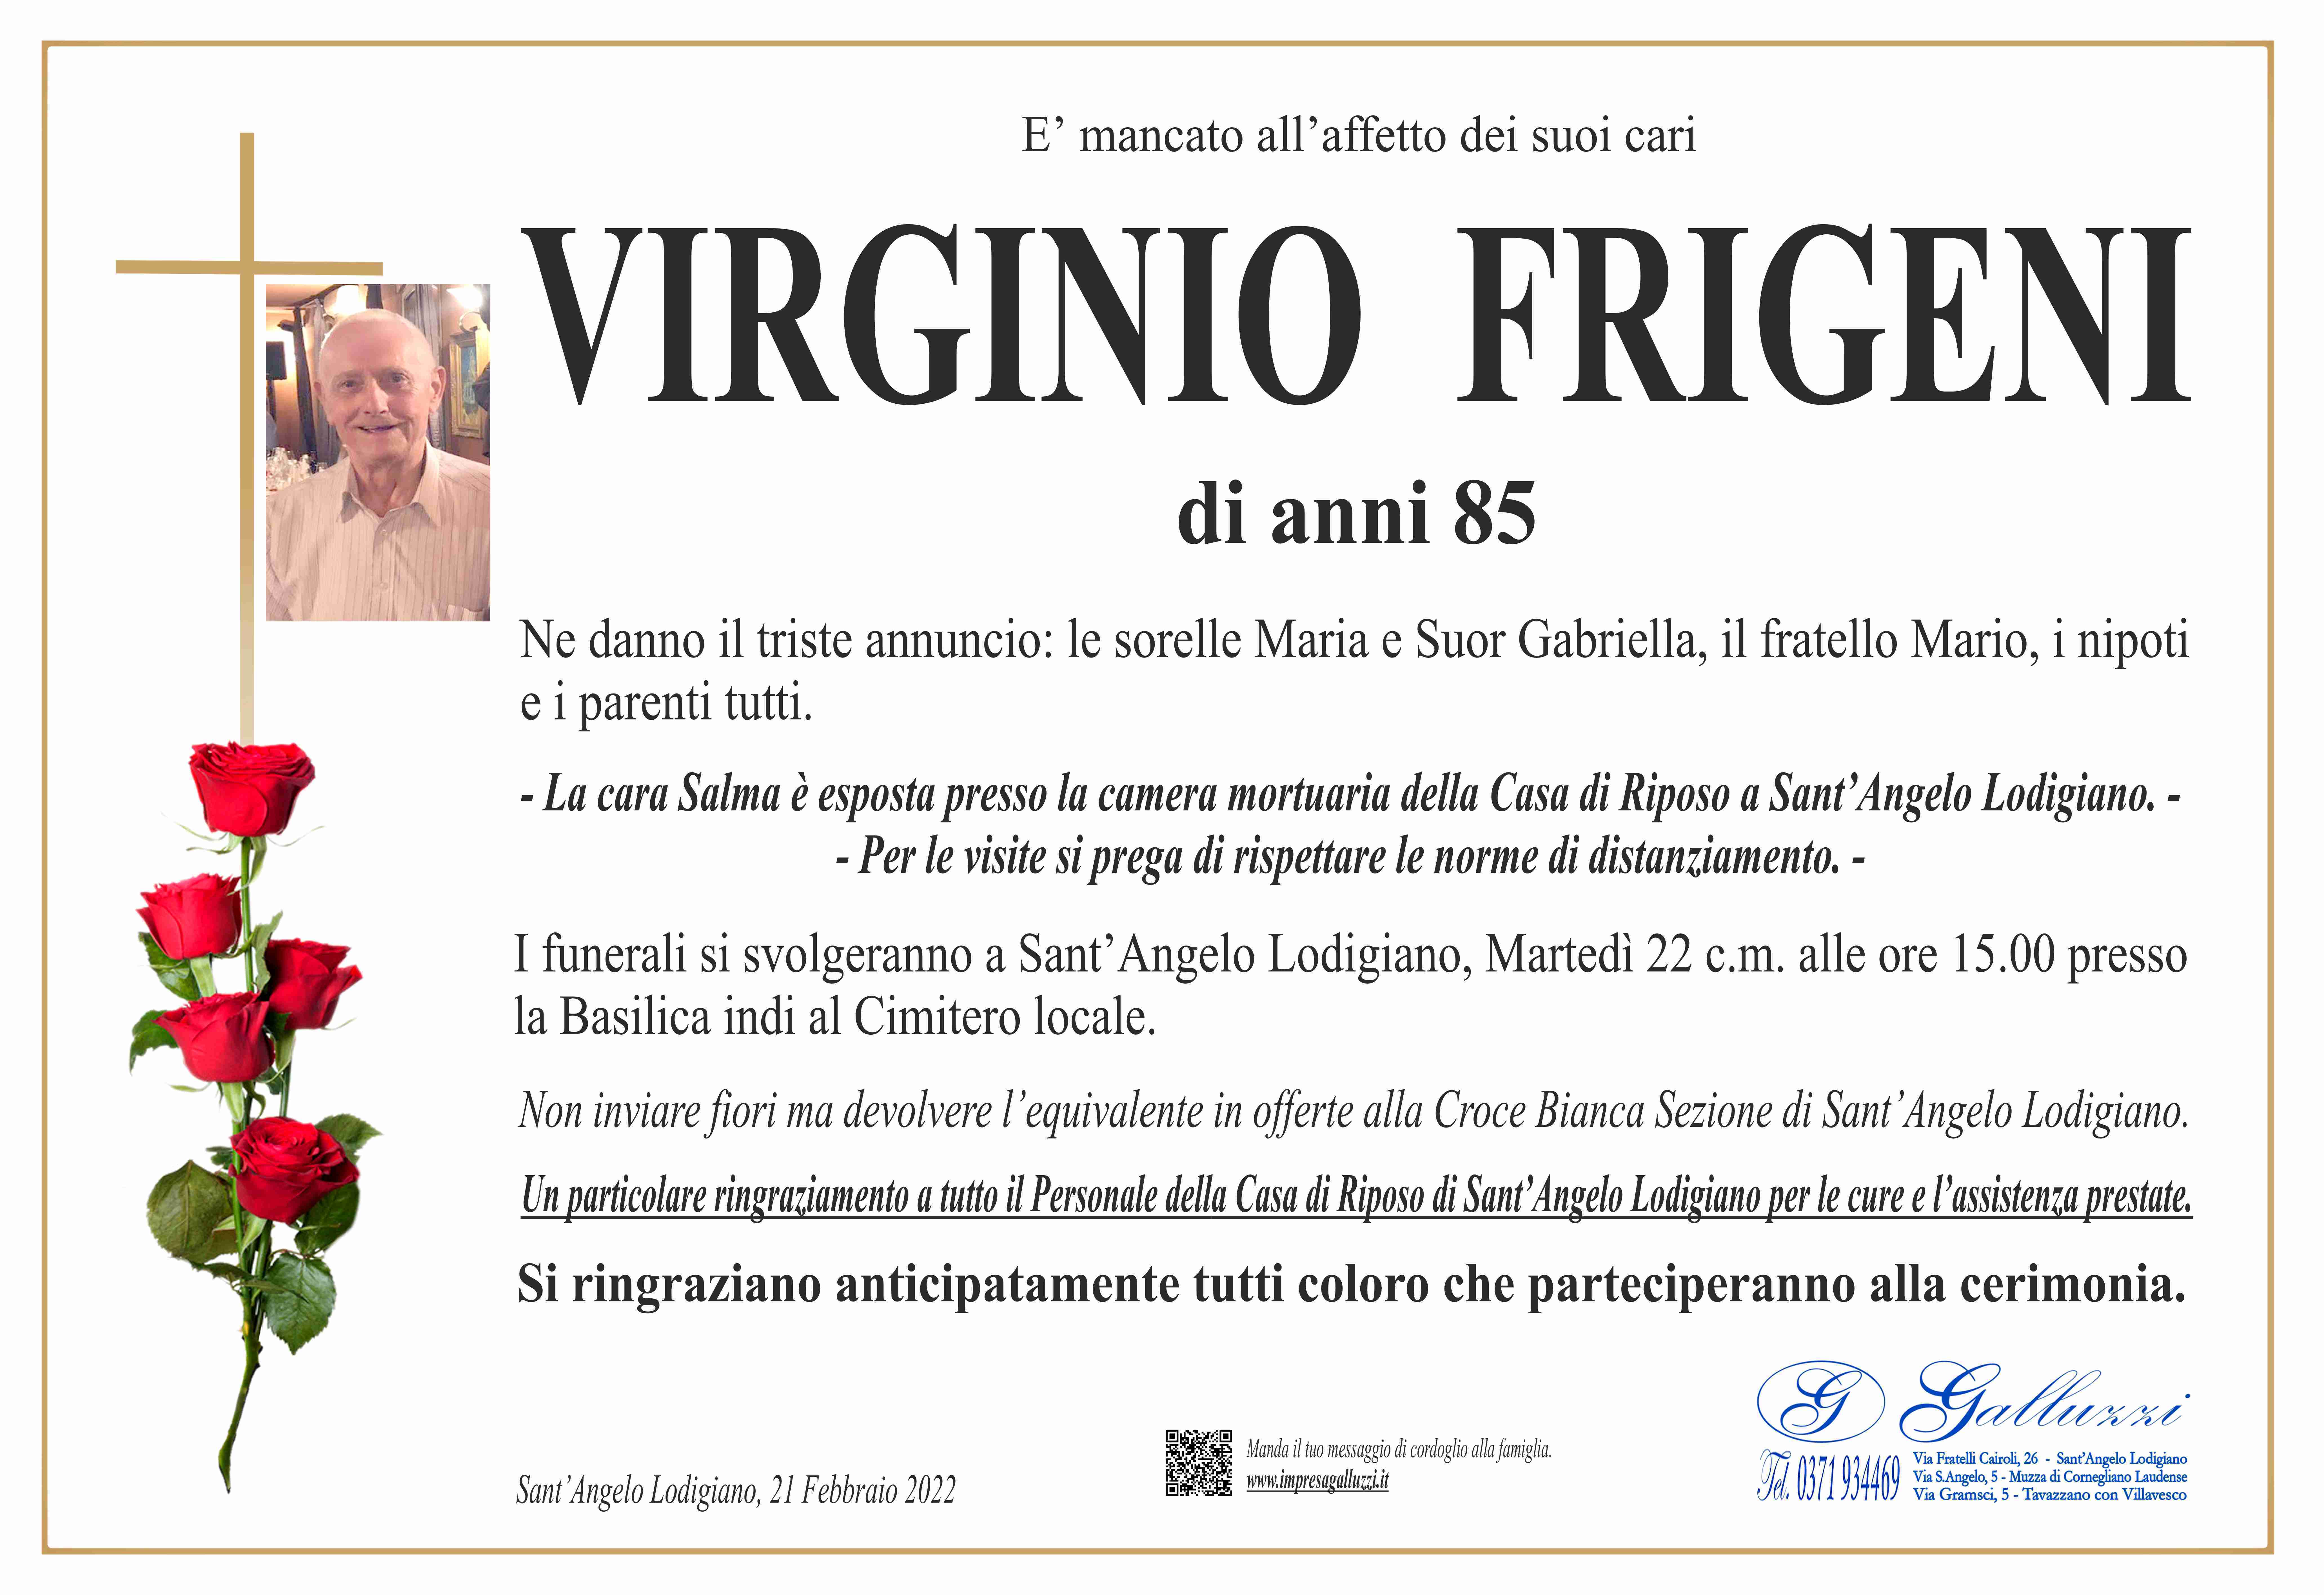 Virginio Frigeni